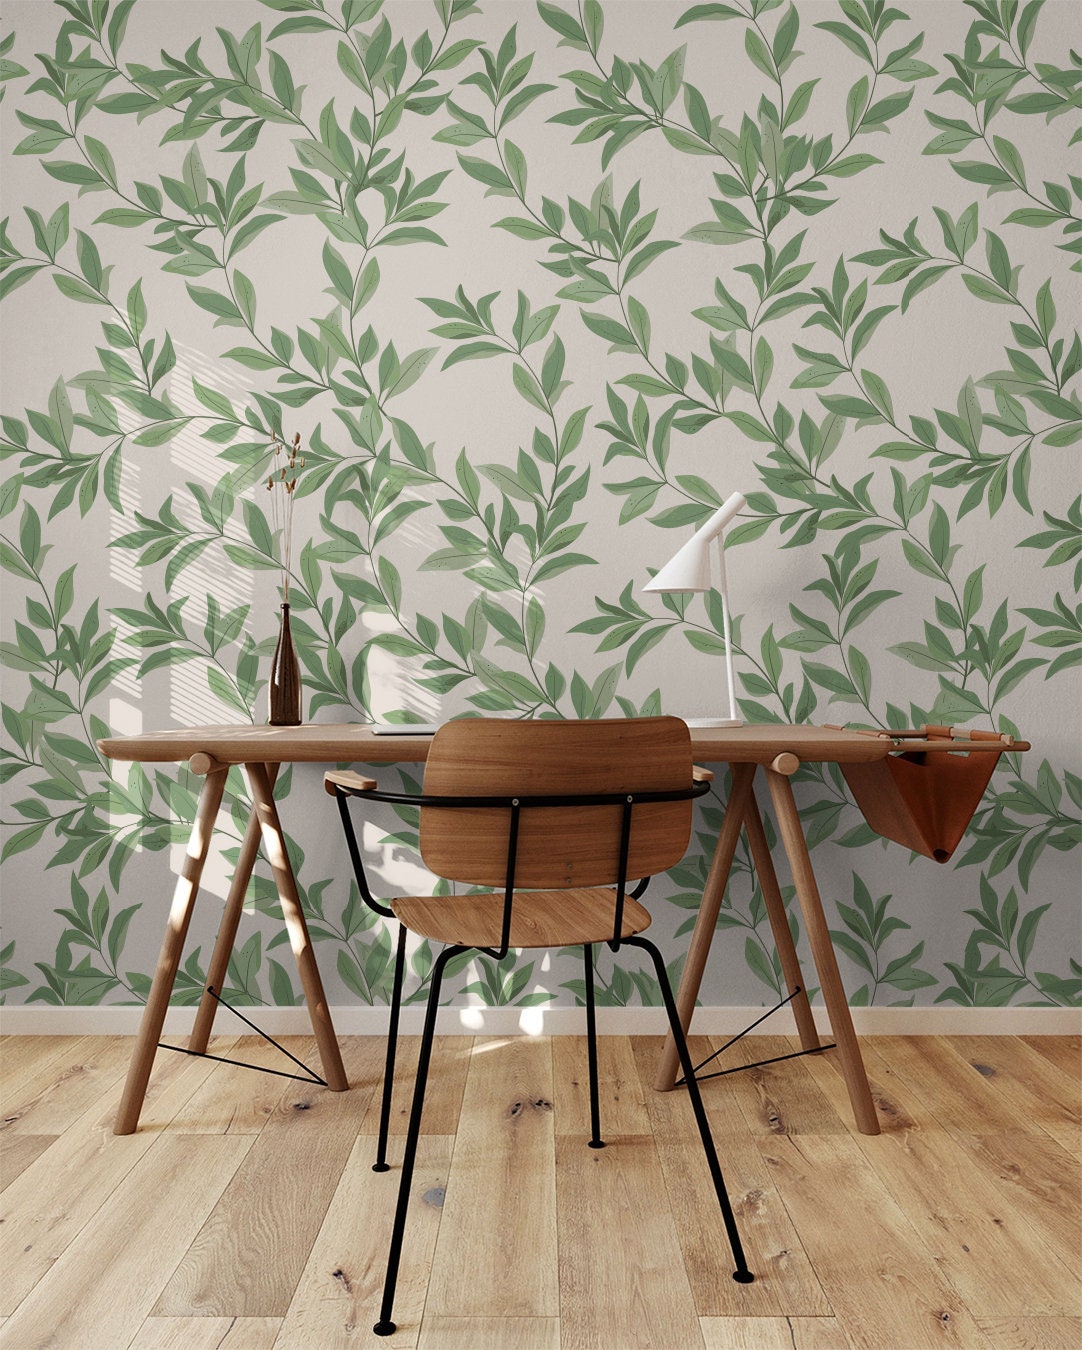 Beige Green Foliage Wallpaper | Removable Wallpaper | Peel And Stick Wallpaper | Adhesive Wallpaper | Wall Paper Peel Stick Wall Mural 2374 - JamesAndColors